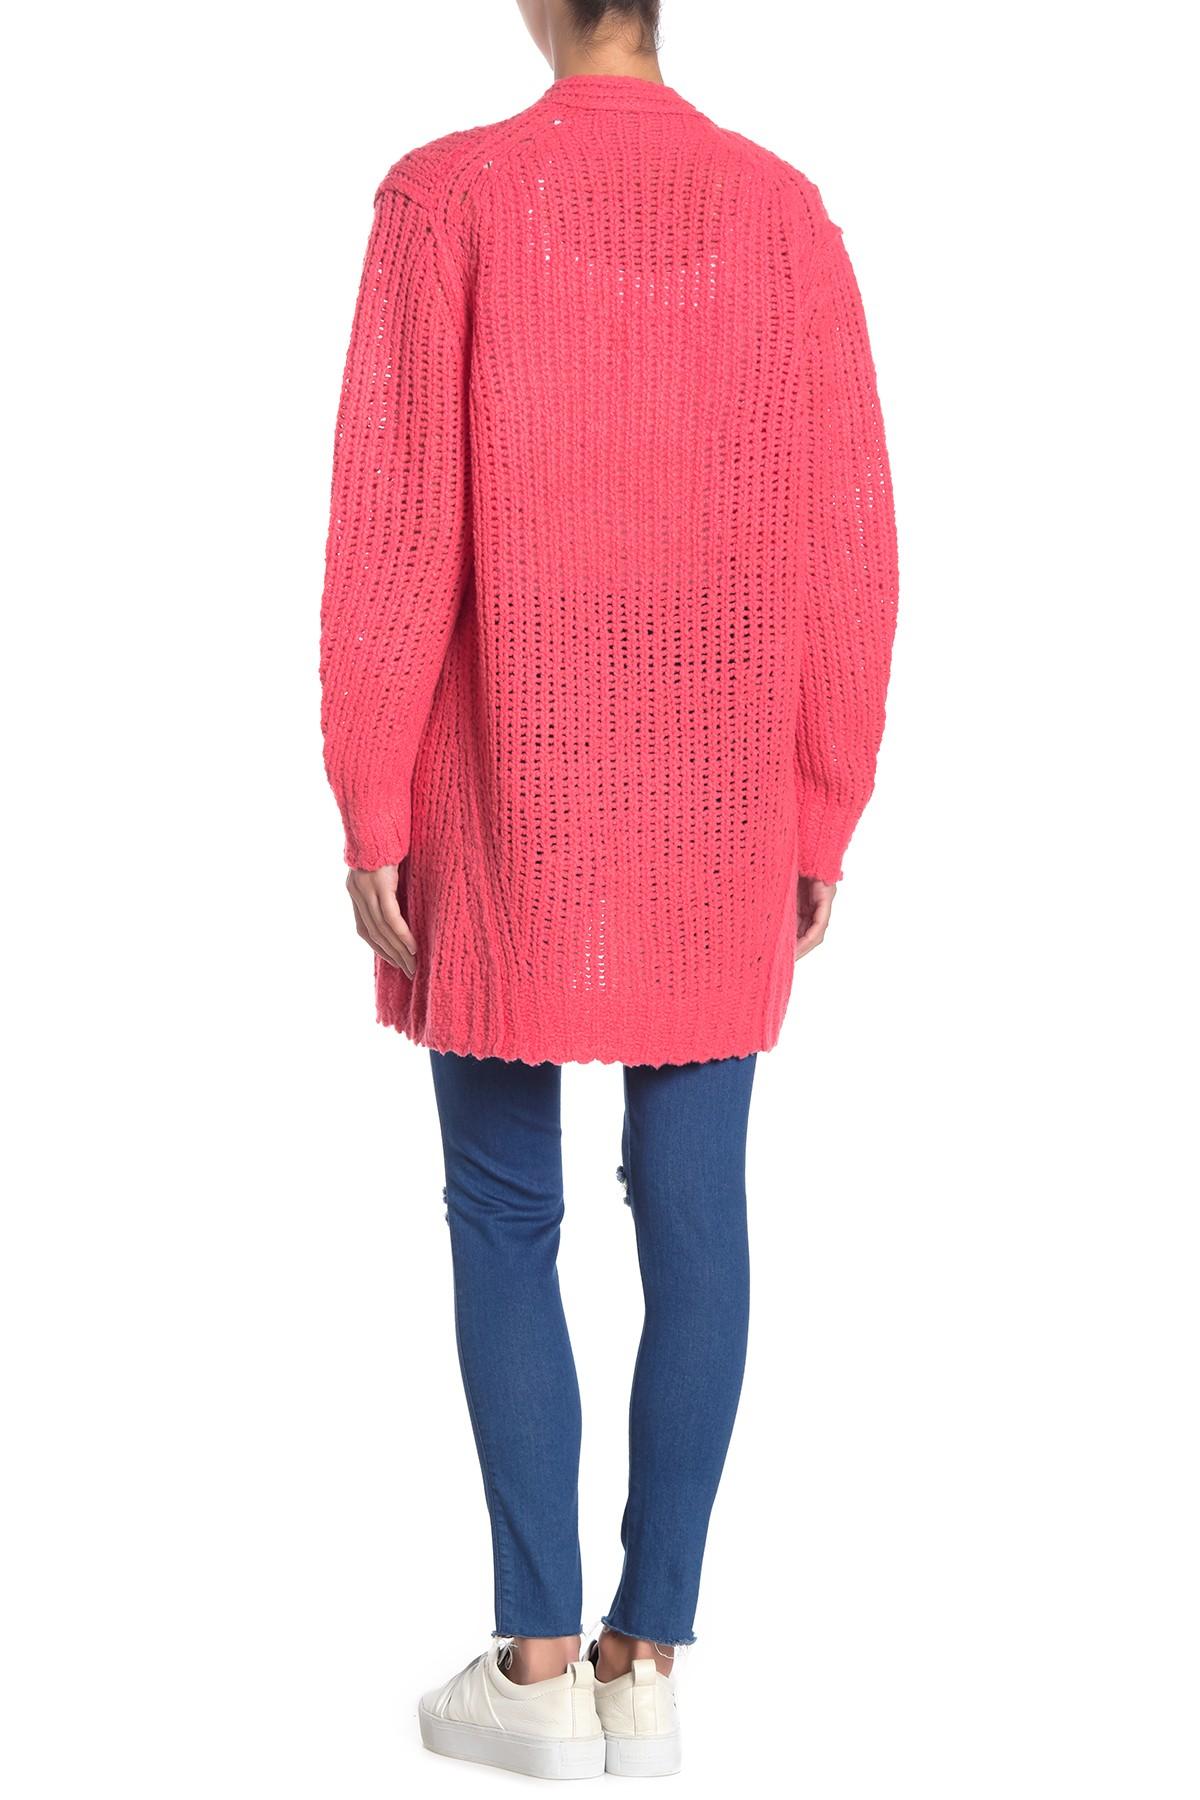 Rag & Bone Arizona Merino Wool Cardigan in Pink - Lyst